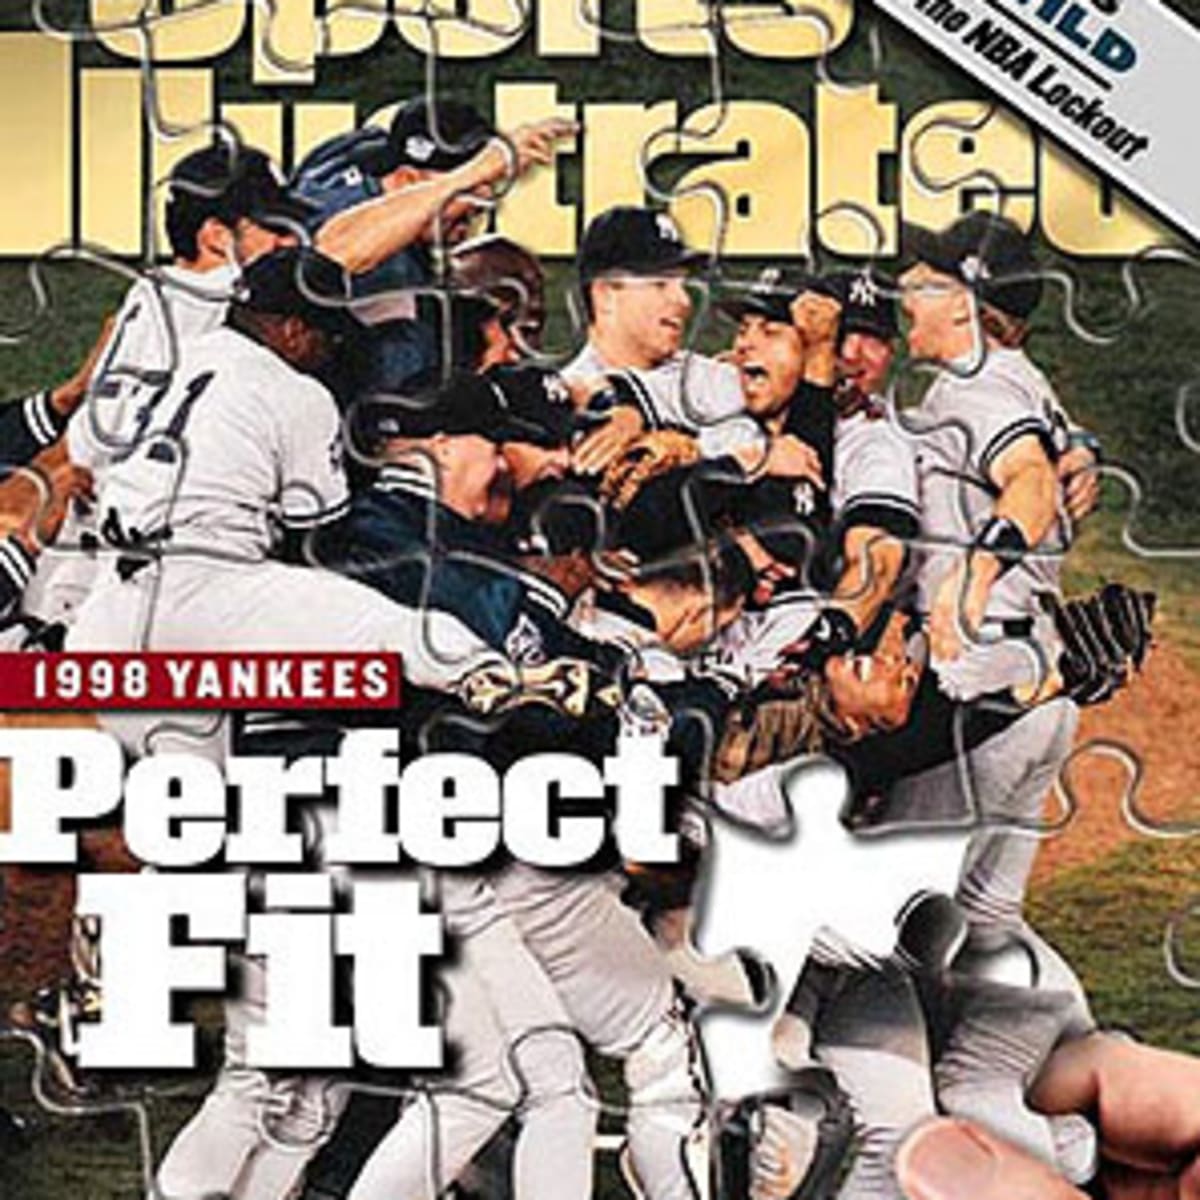 David Cone thinks chasing 1998 team will benefit Yankees